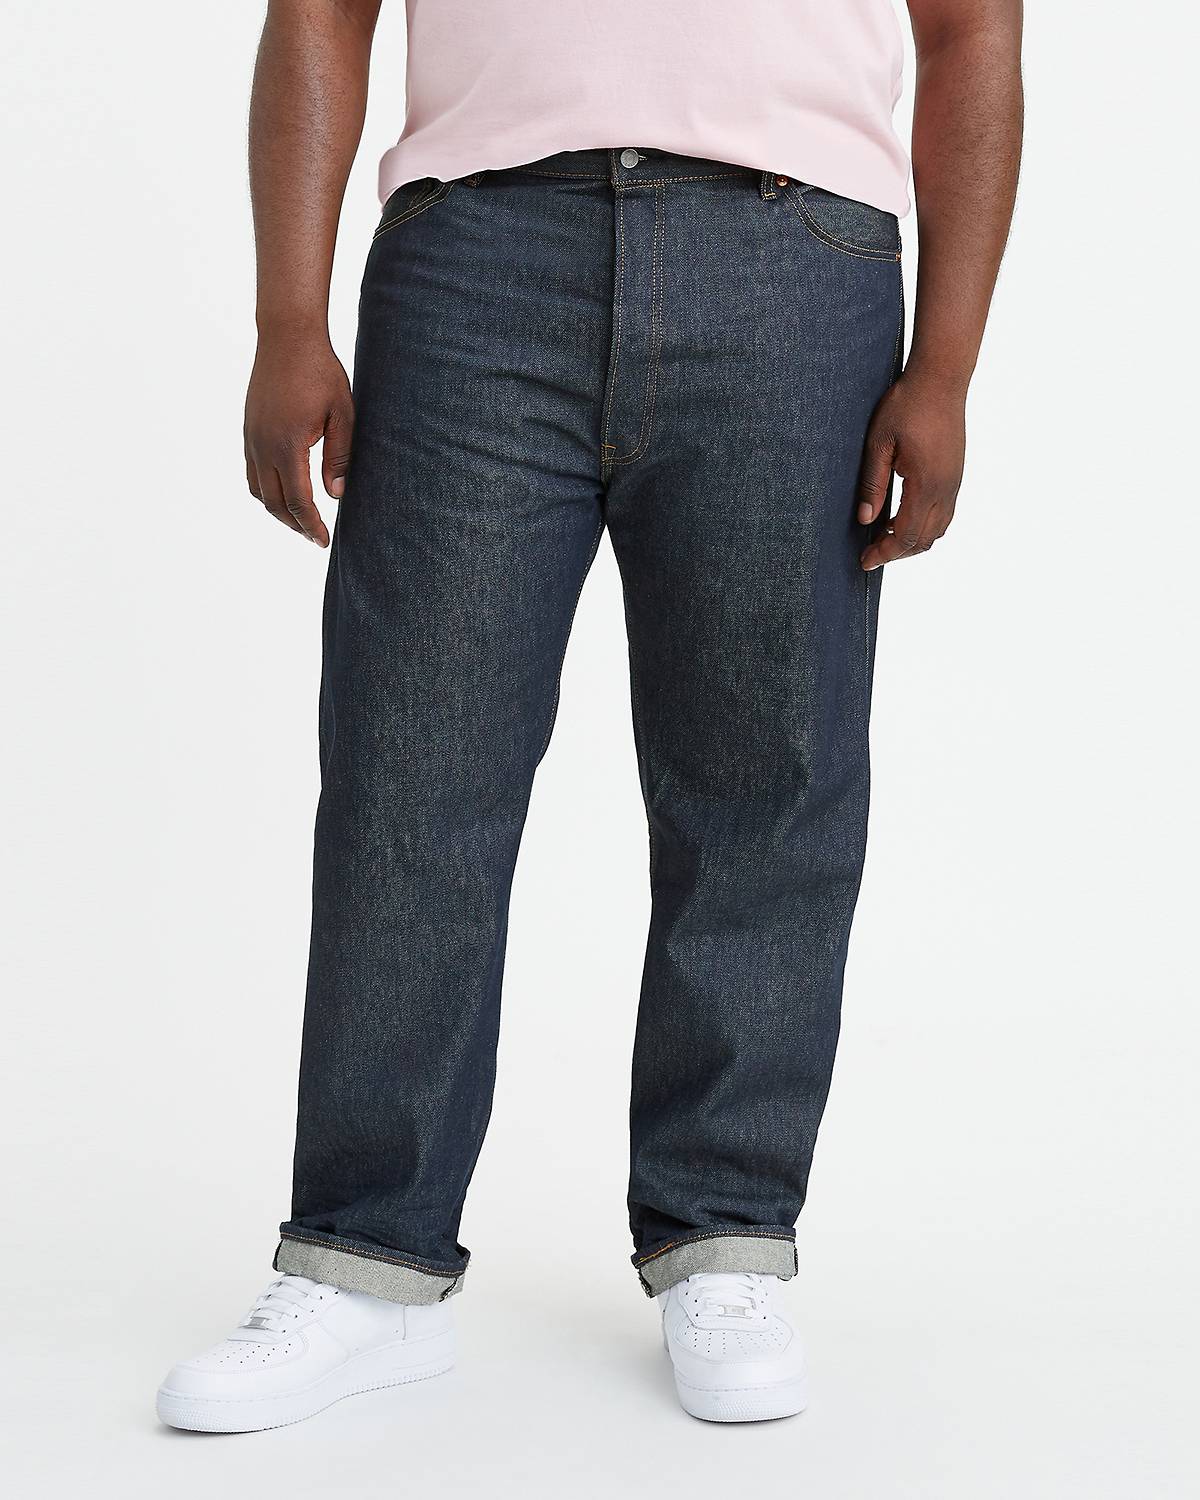 Model wearing 501® Big & Tall jeans